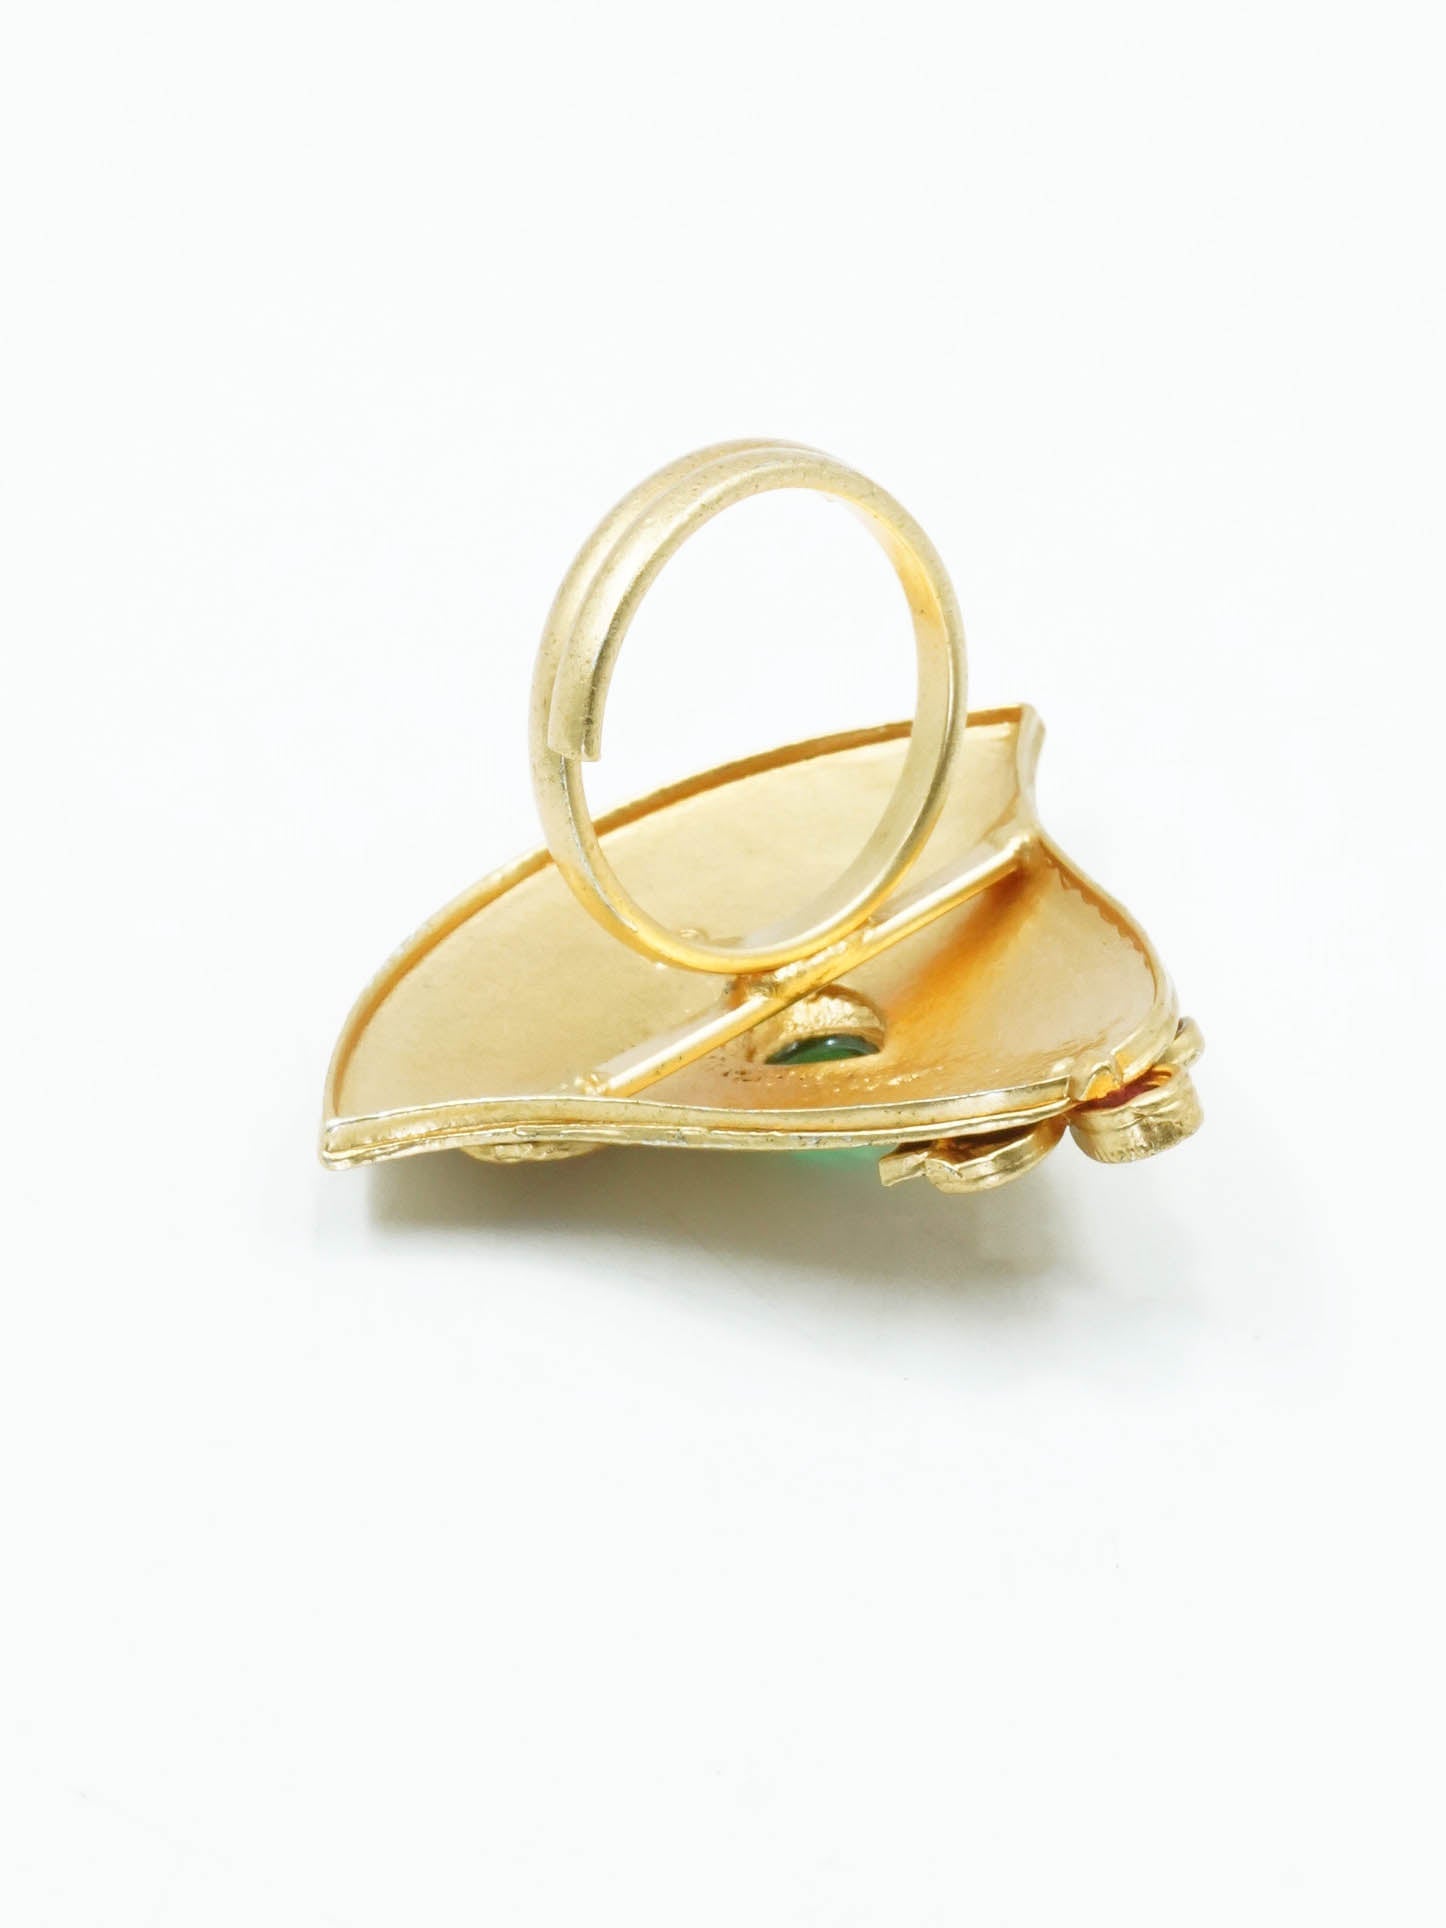 Antique Gold Plated Adjustable Size Designer Finger ring with Stones 11037N